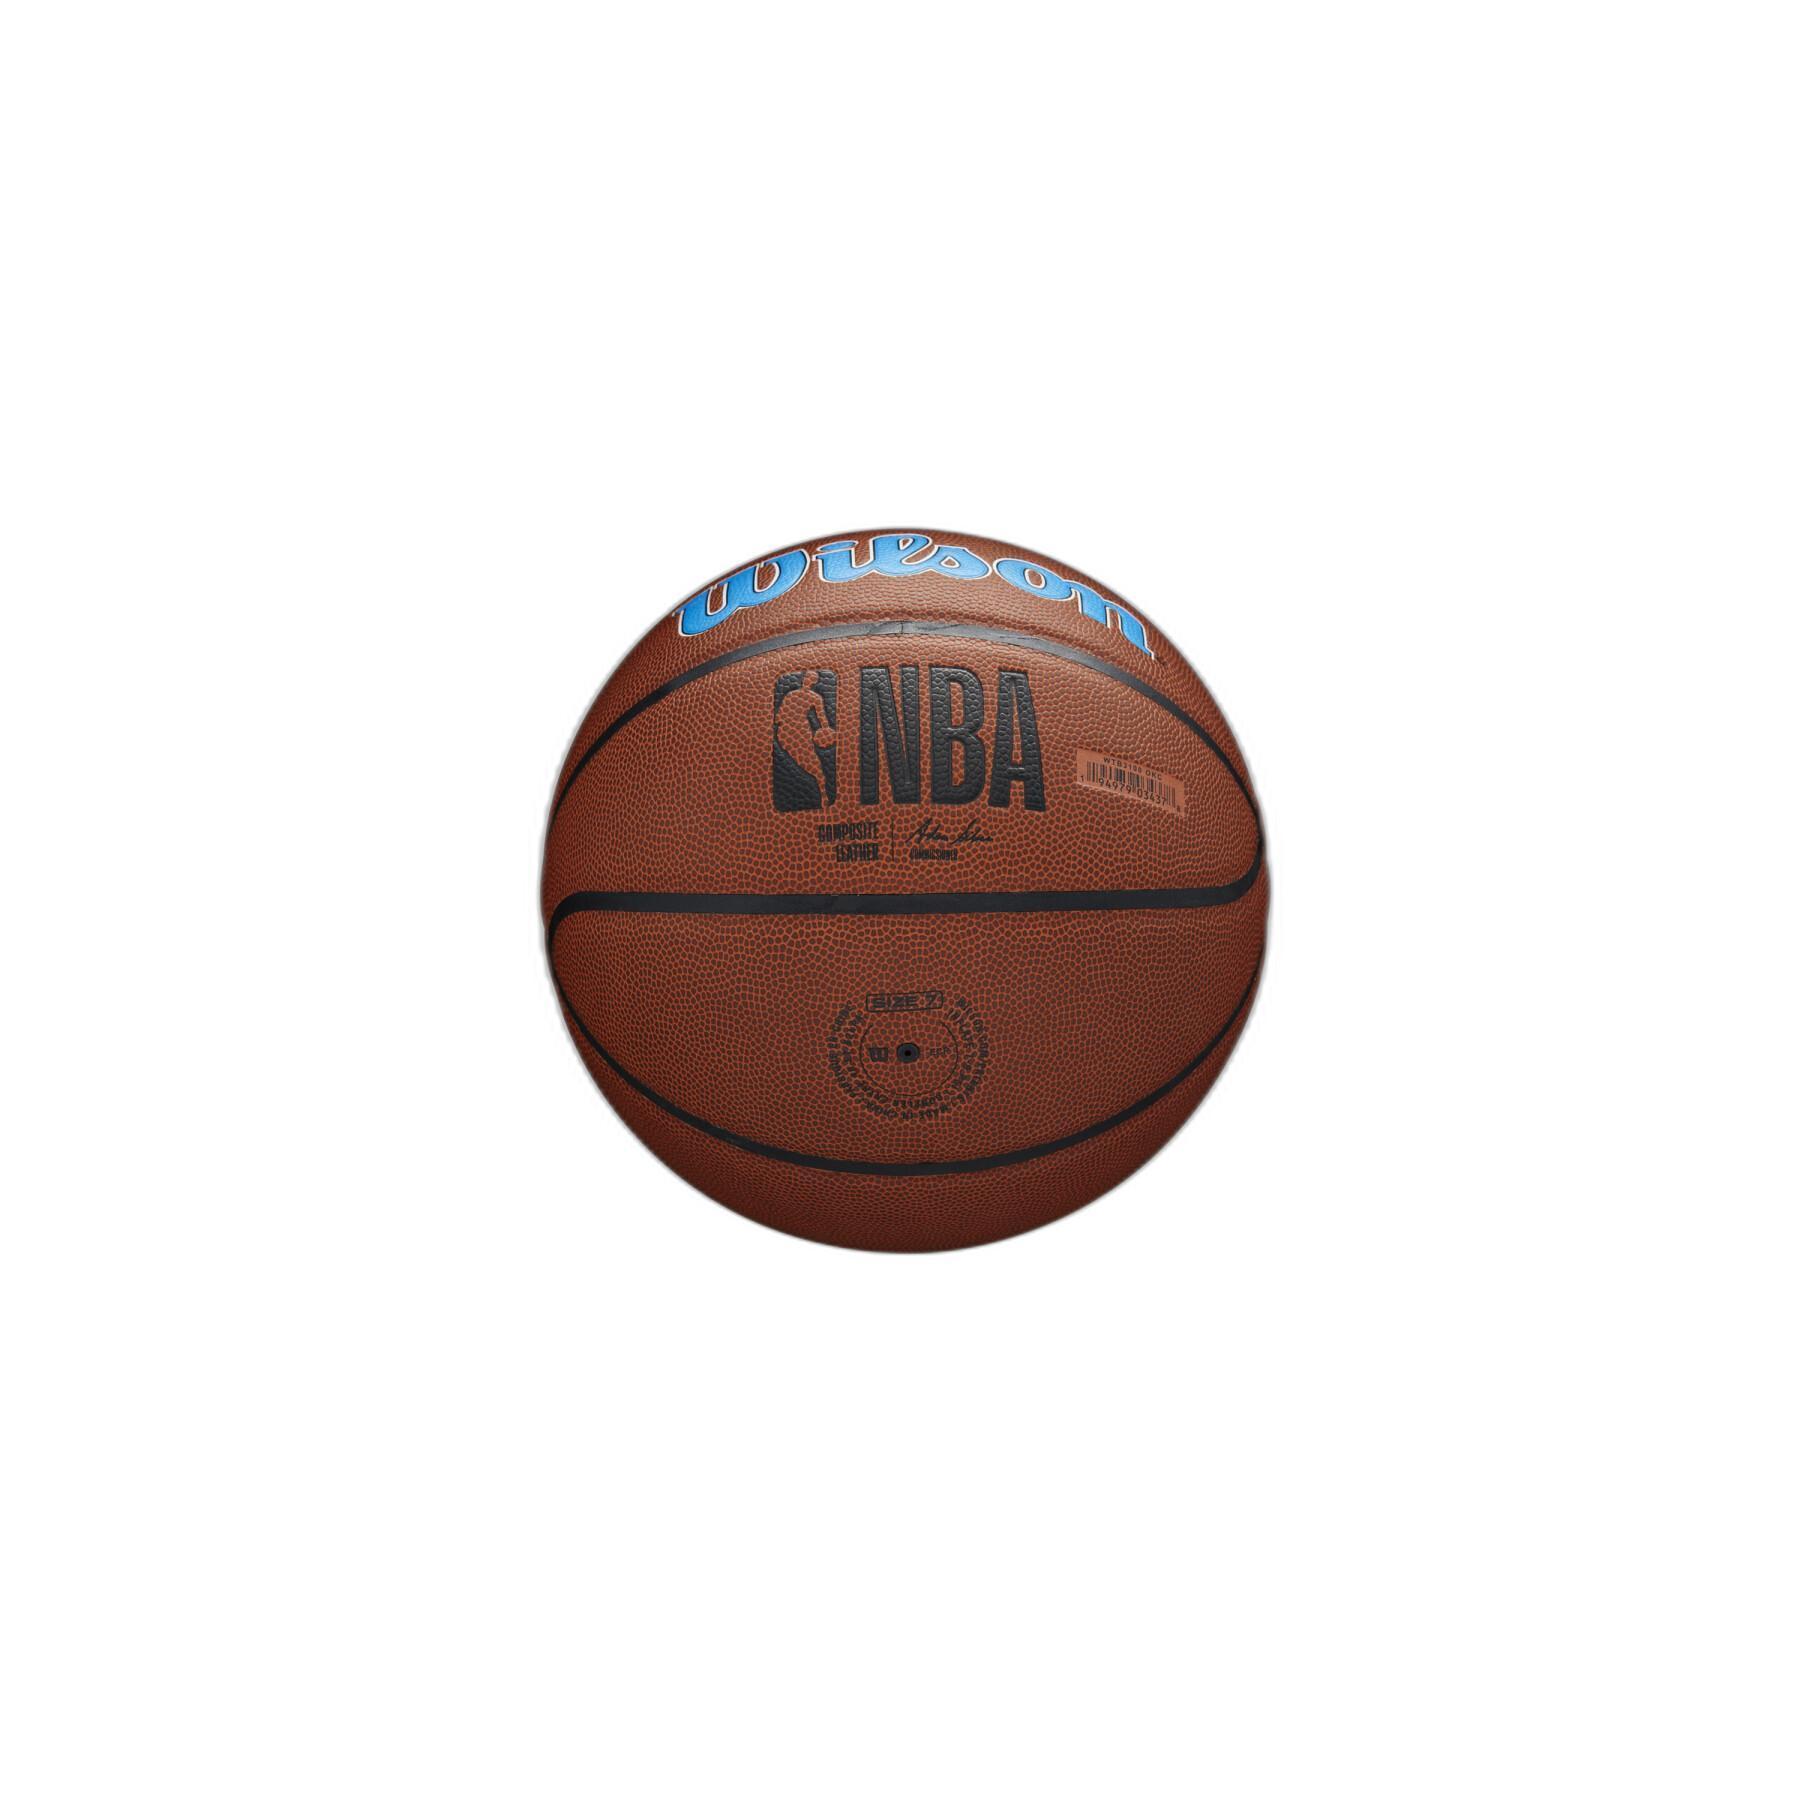 Ballong Oklahoma City Thunder NBA Team Alliance